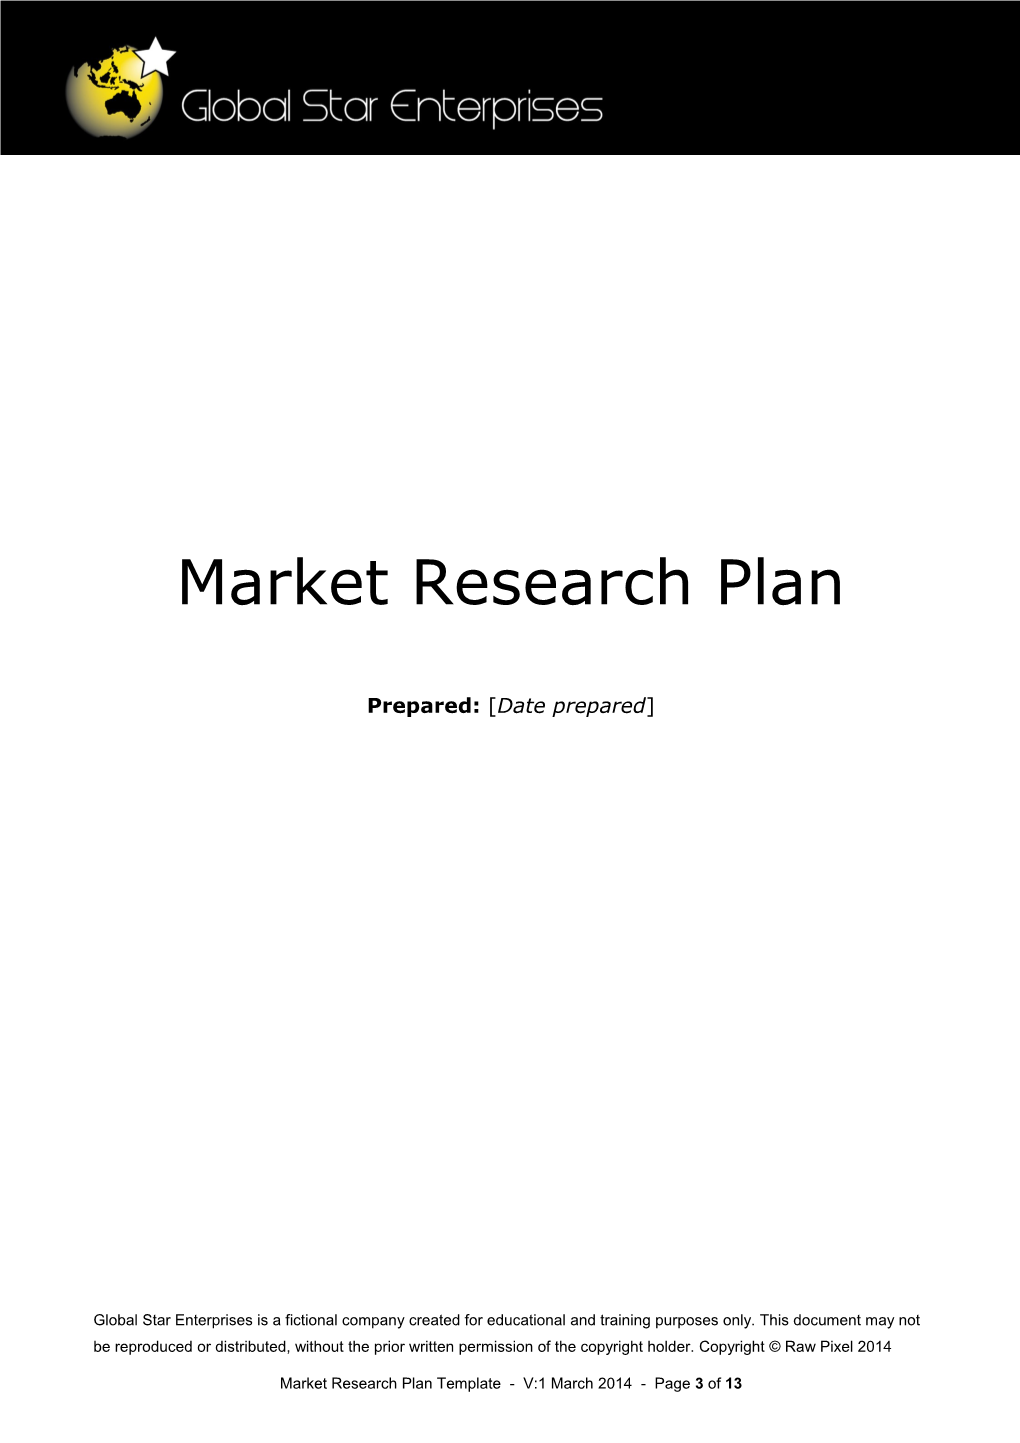 Market Research Plan Template